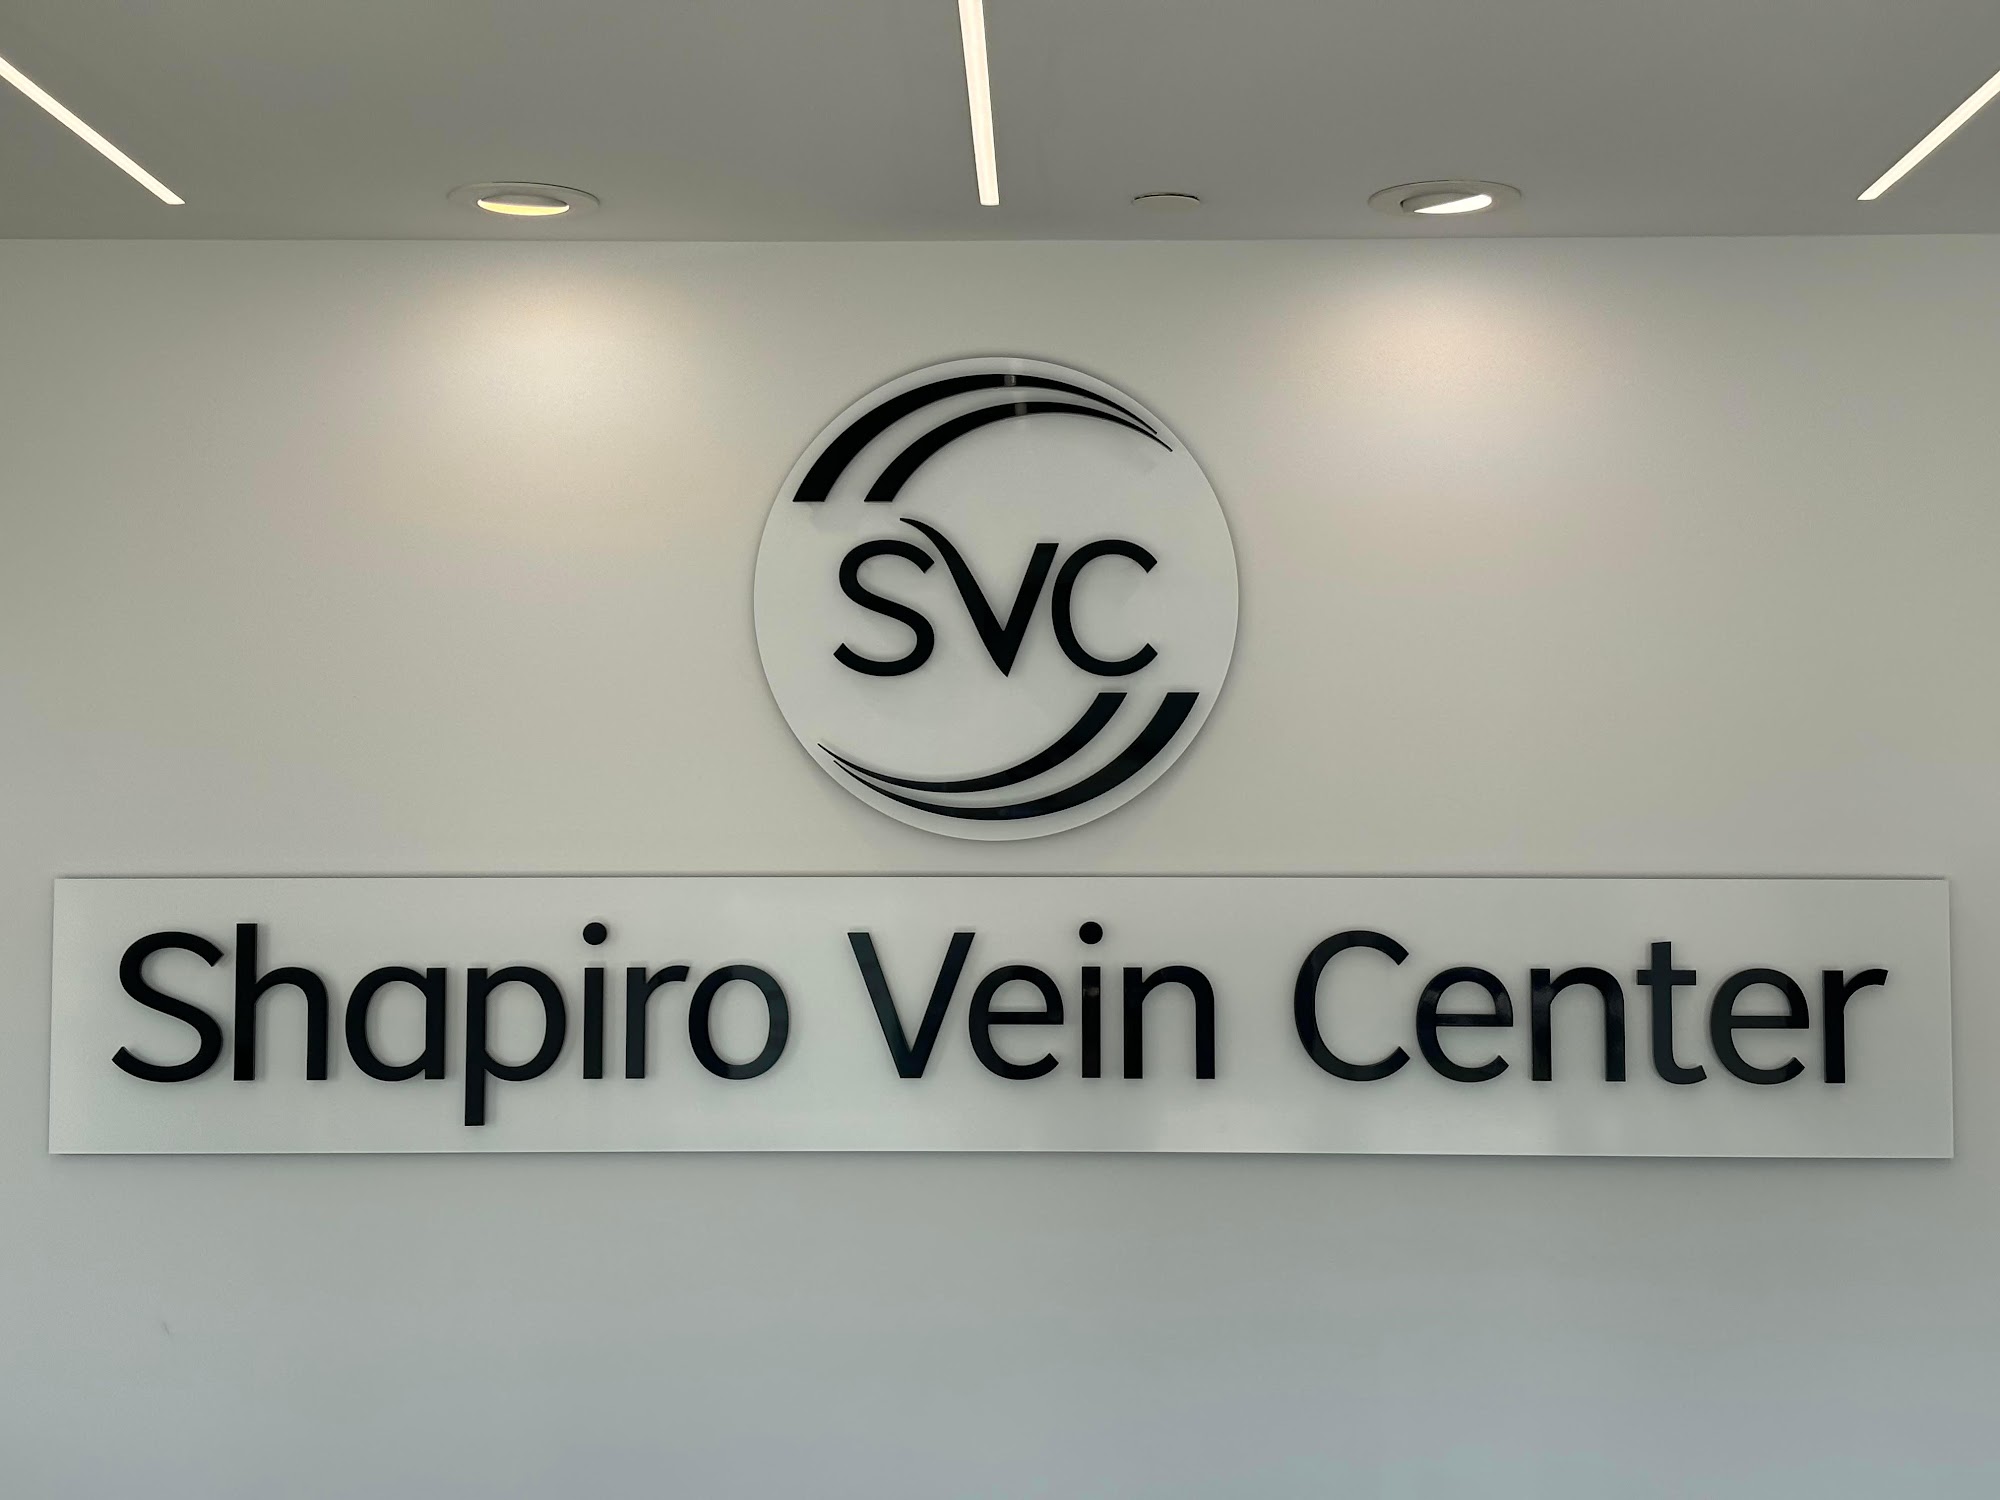 Shapiro Vein Center 4318 W Touhy Ave, Lincolnwood Illinois 60712